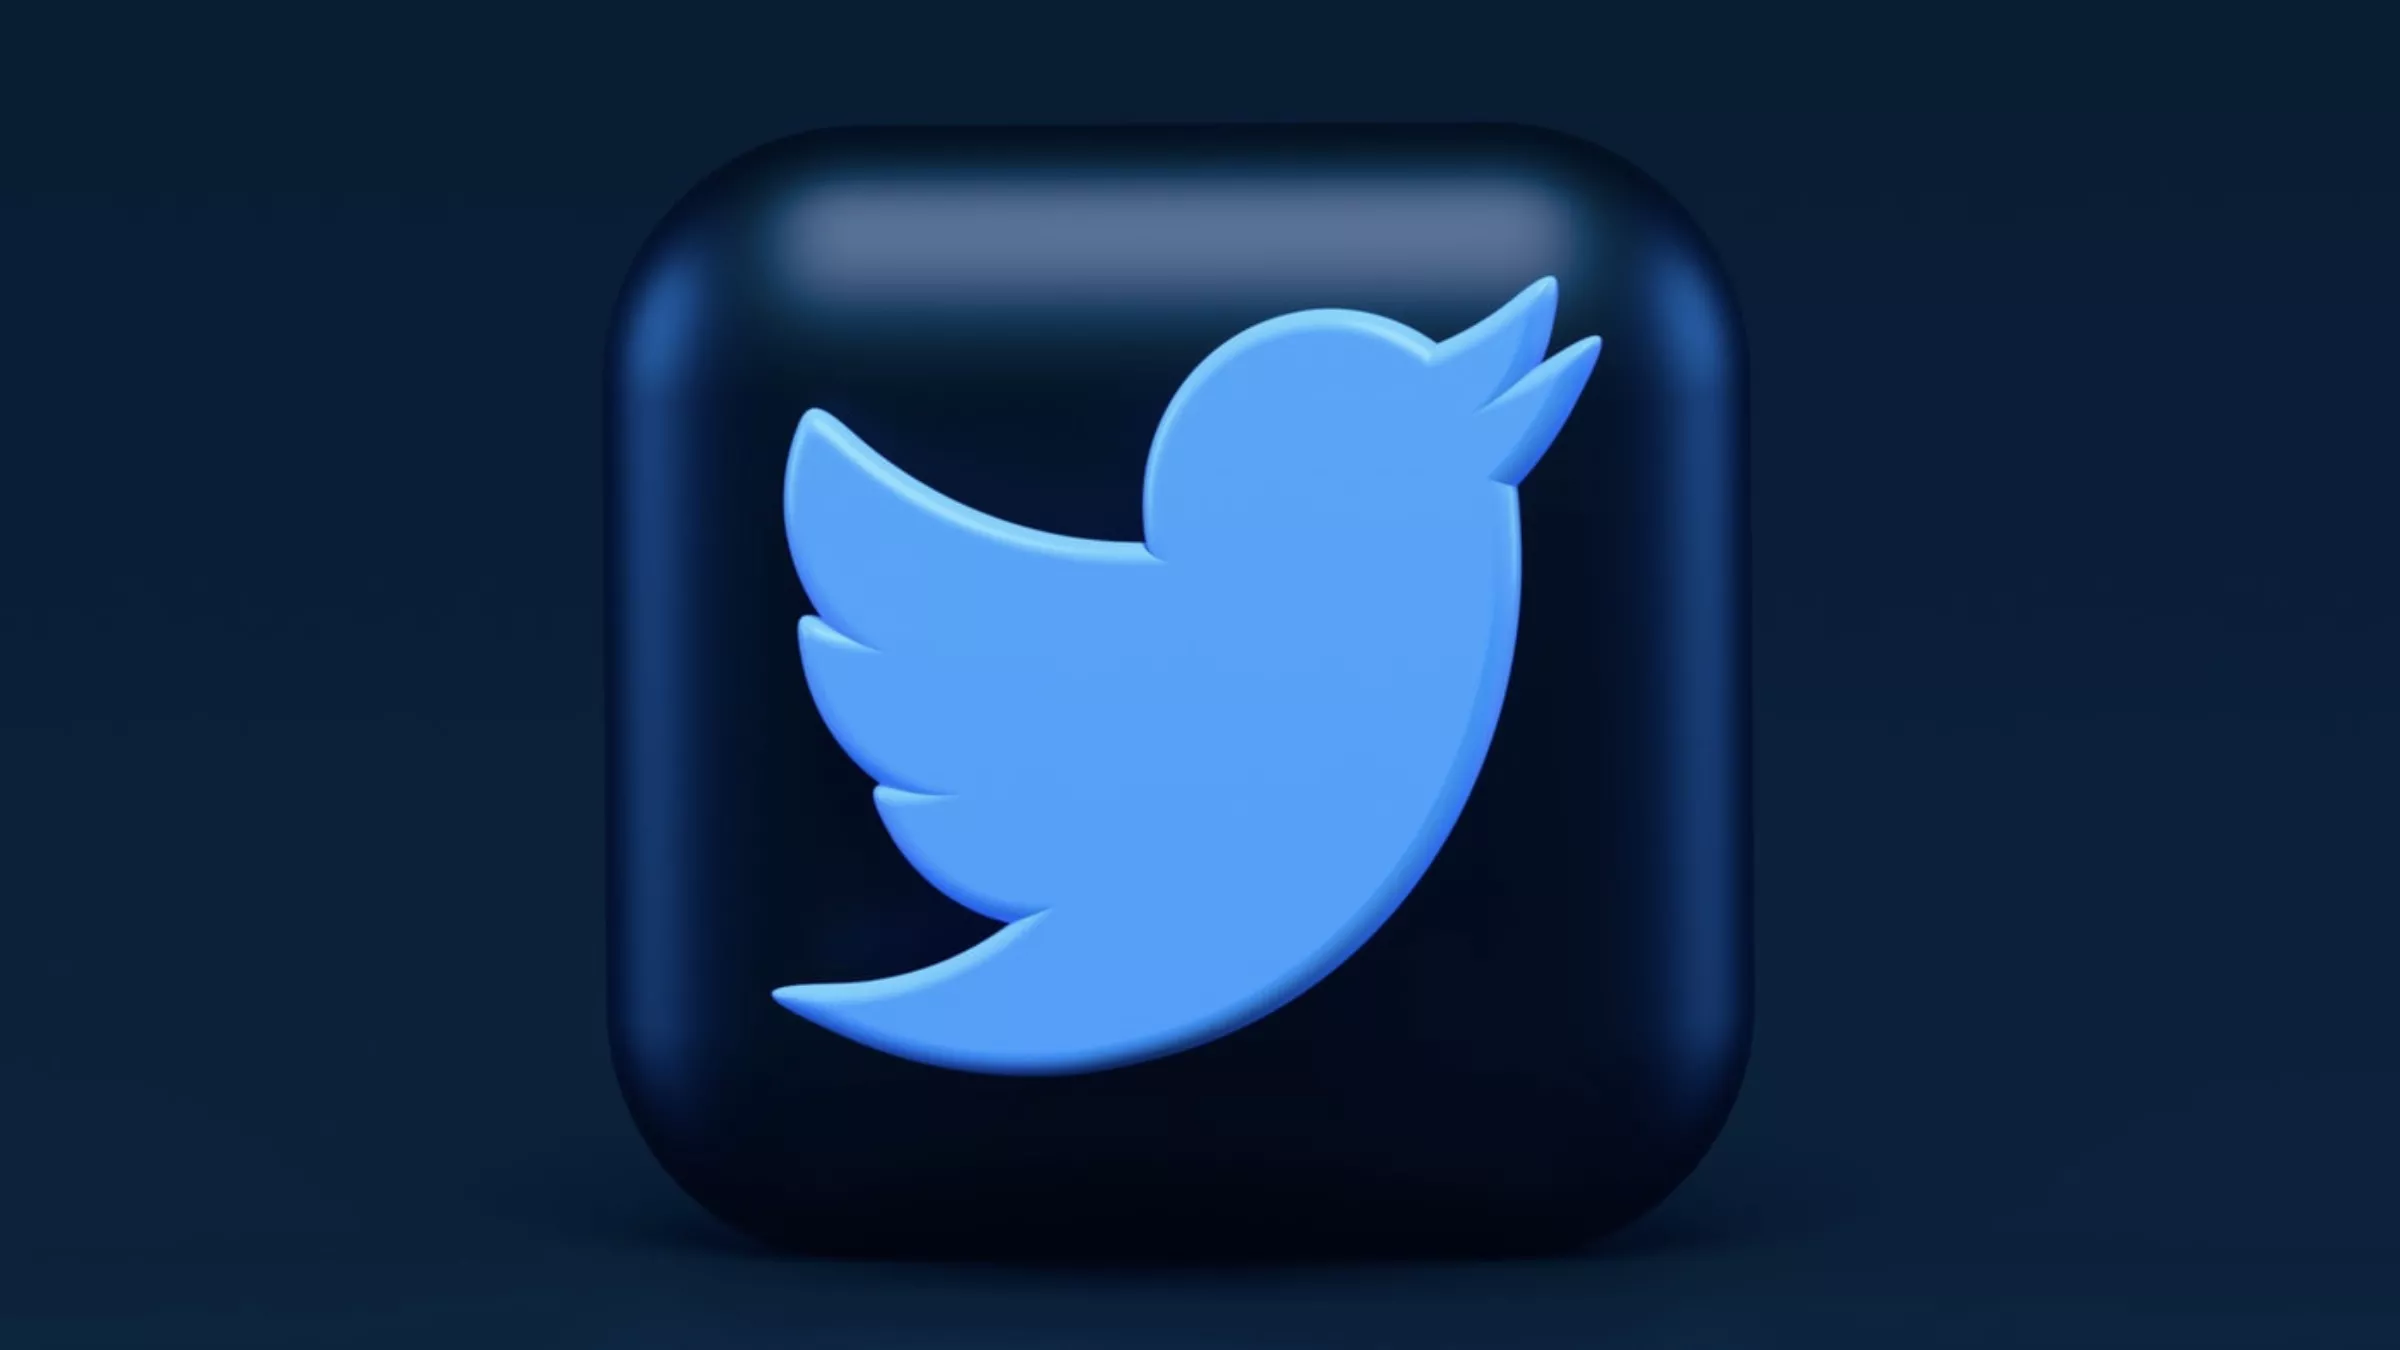 Twitter Blue representative image